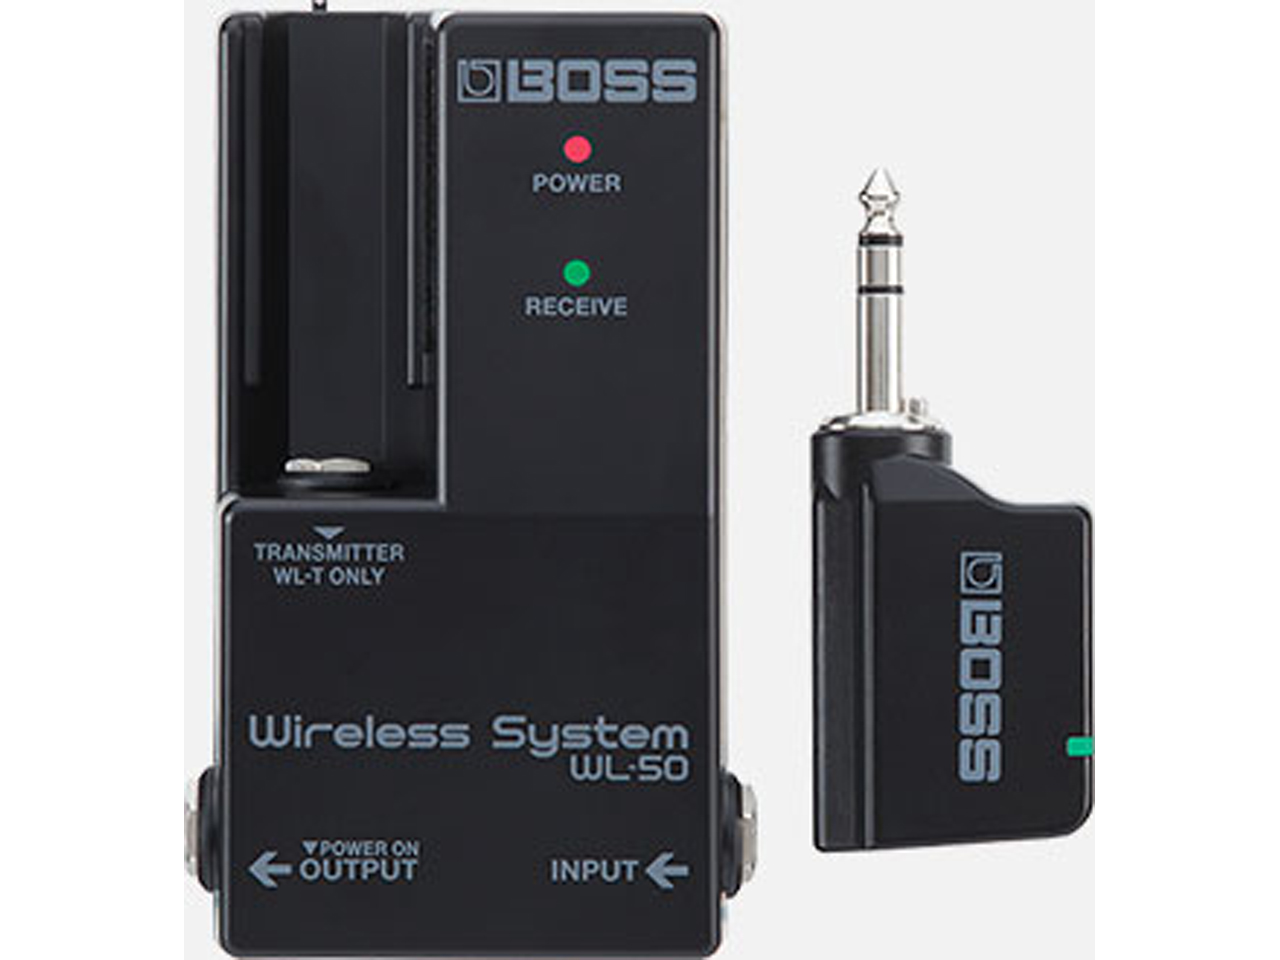 BOSS(ボス) WL-50 Wireless System (ワイヤレスシステム)